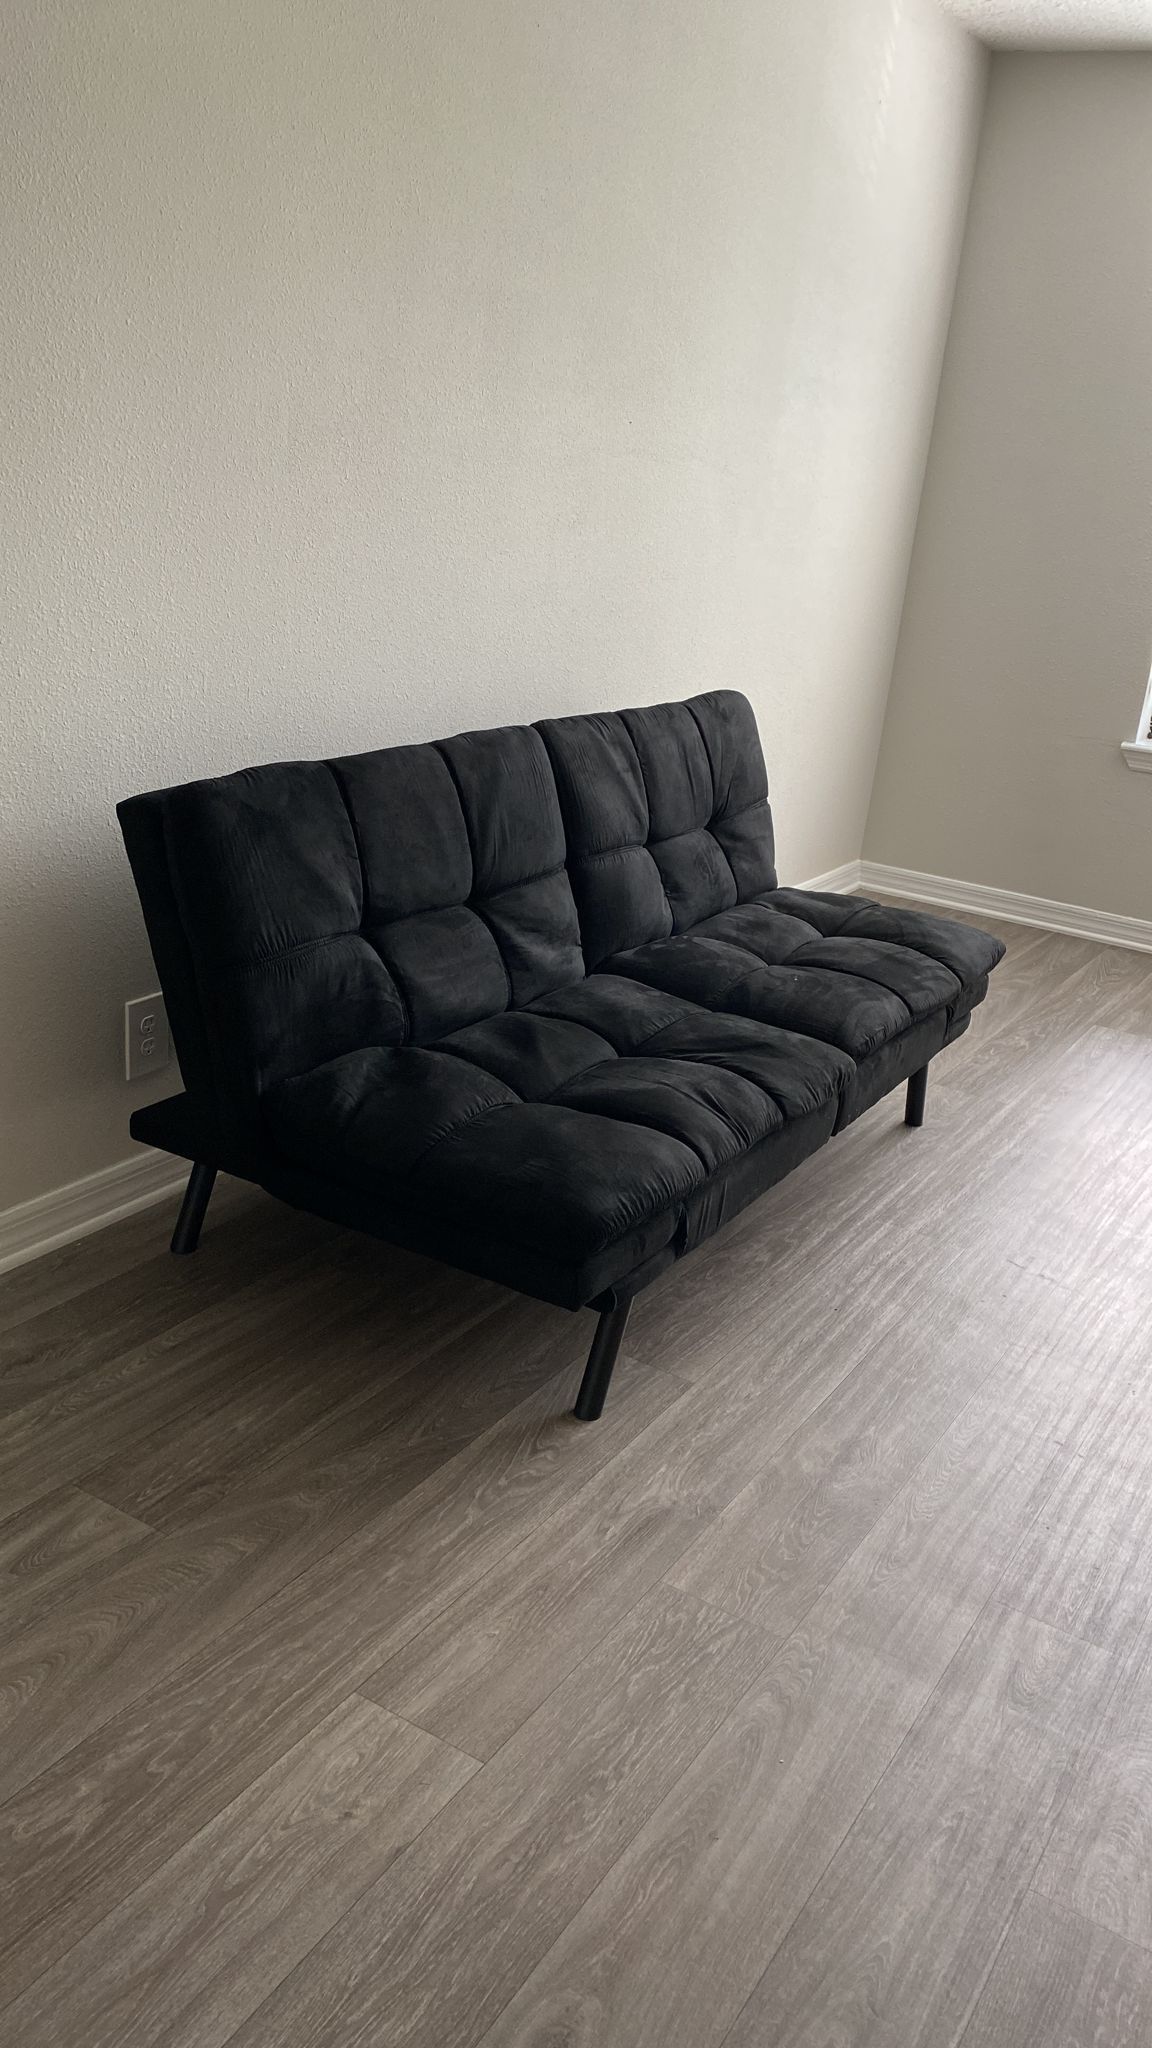 Black micro sofa futon 